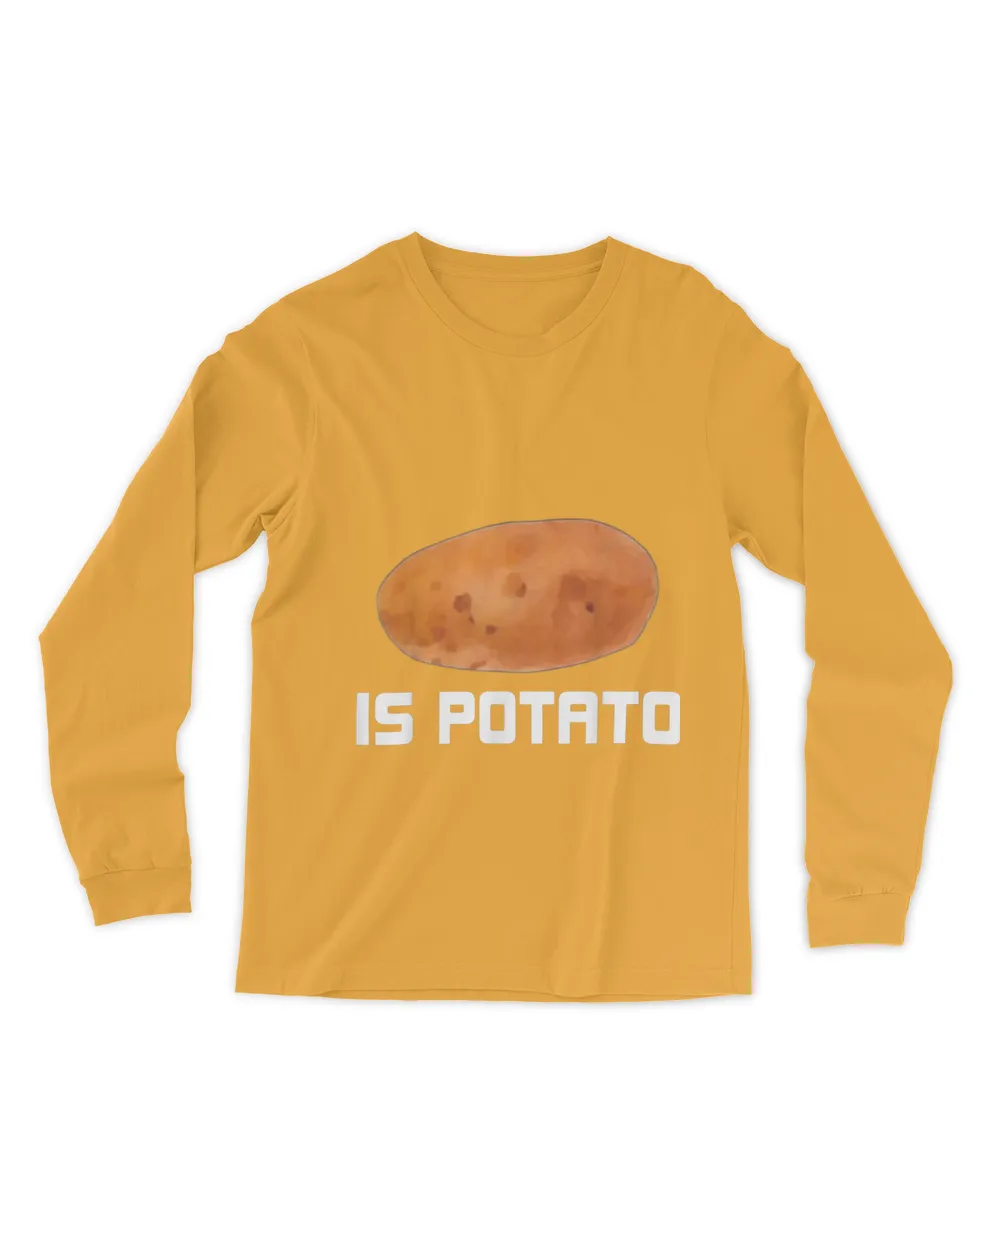 Stephen Colbert Is Potato T-Shirt